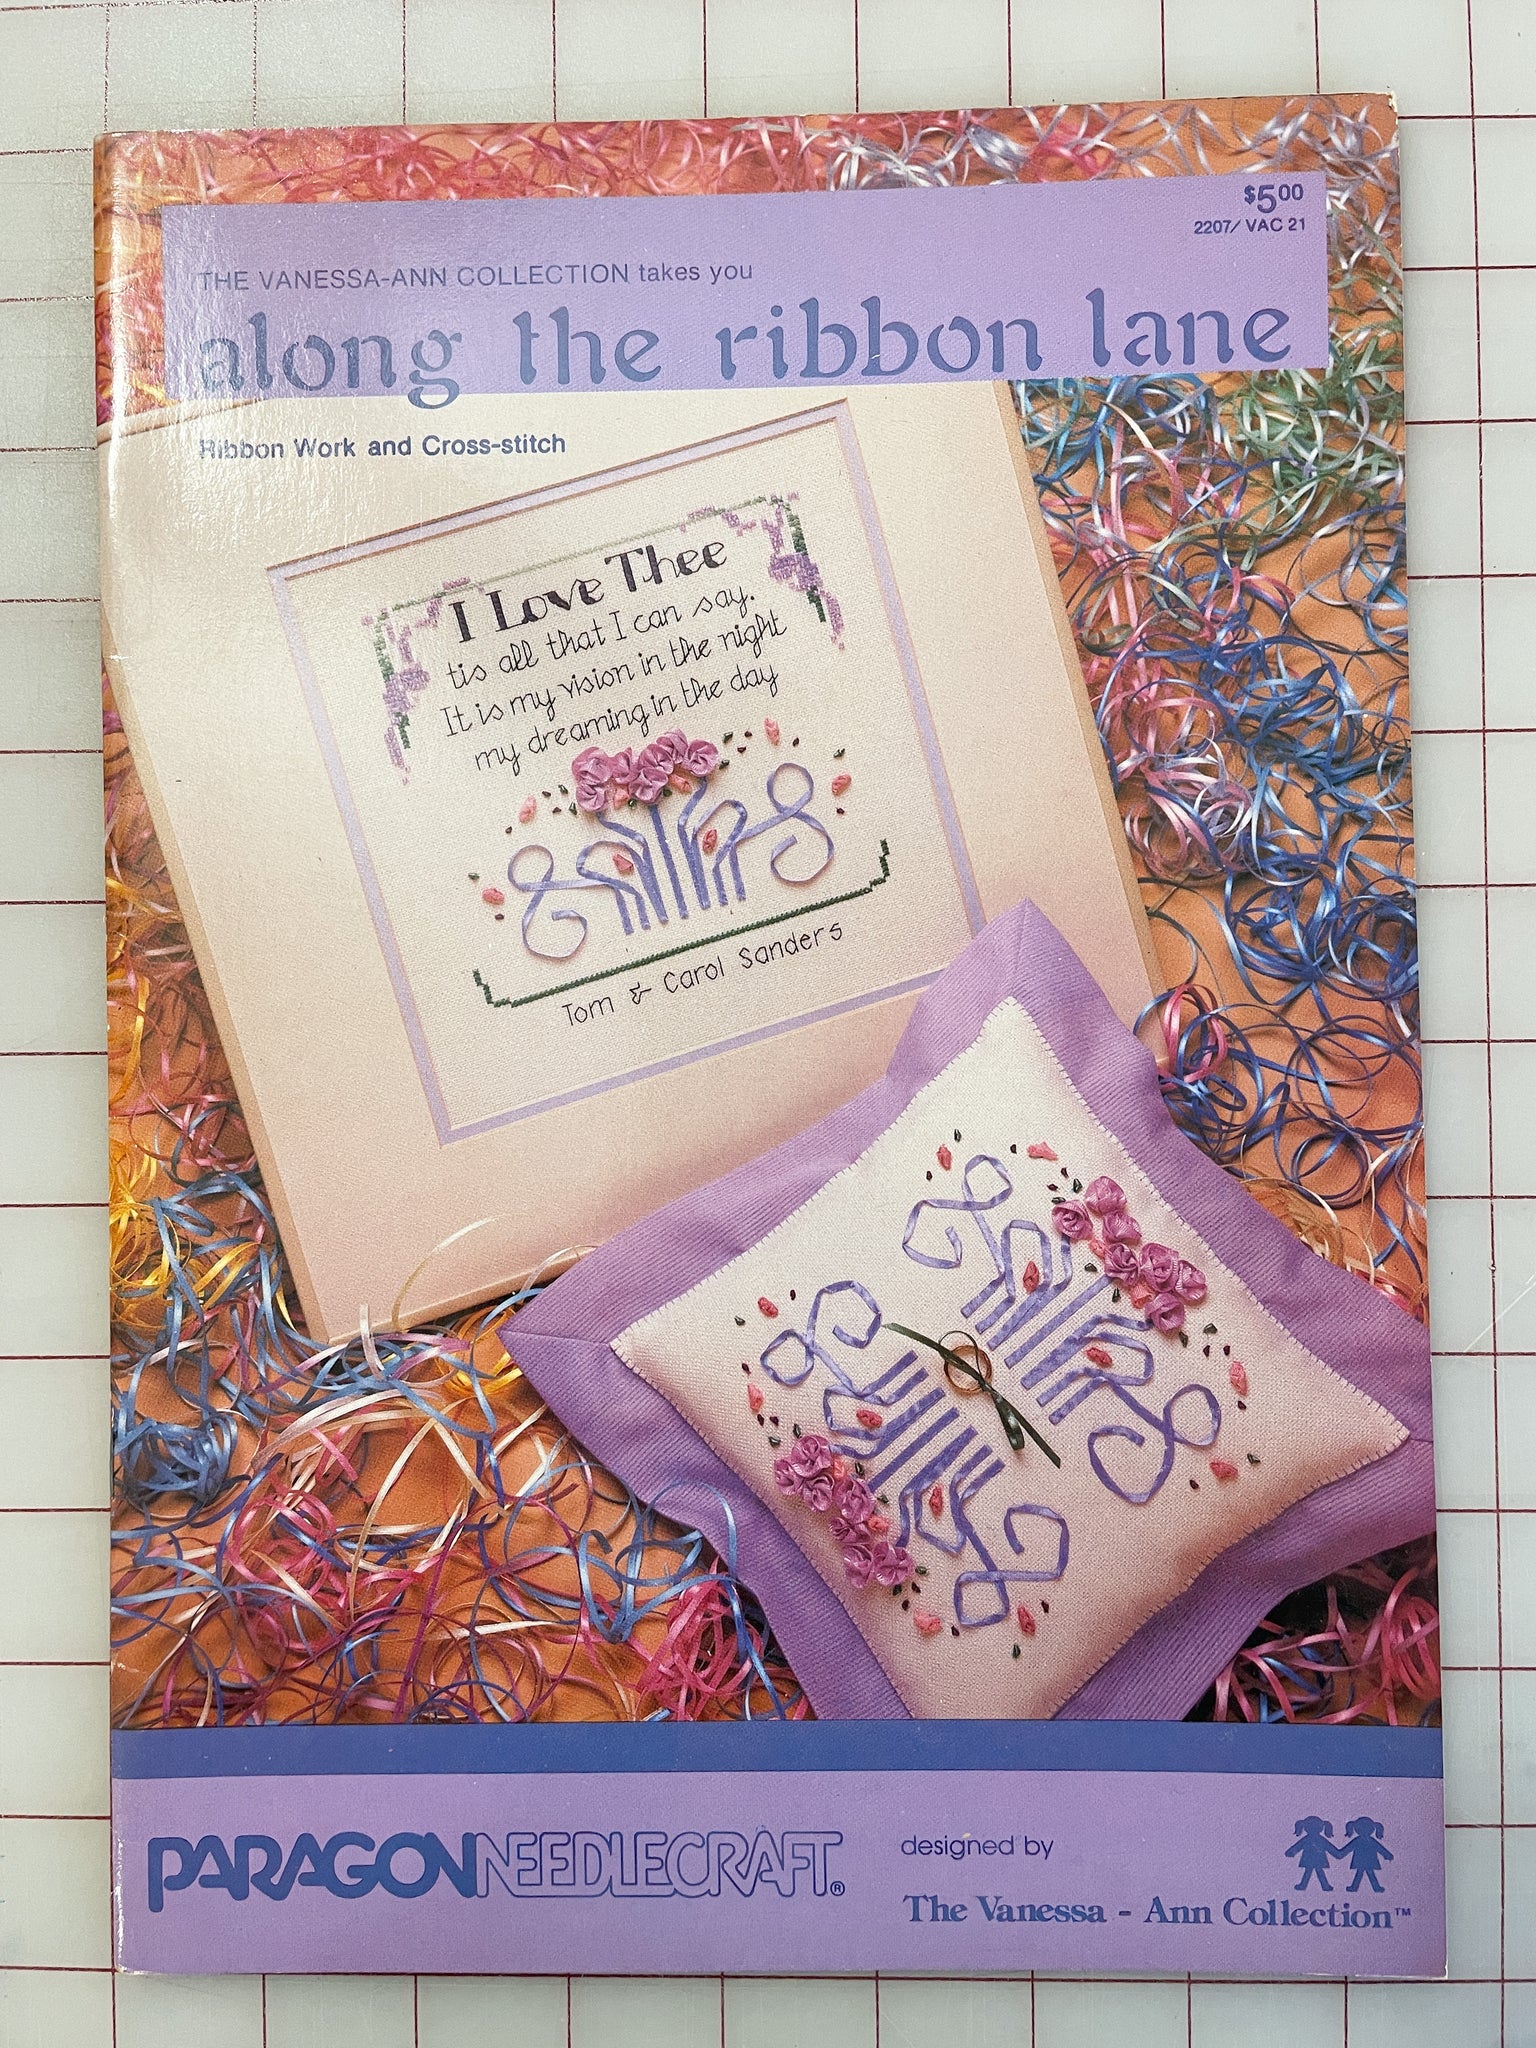 SALE 1984 Ribbon Embroidery and Cross Stitch Pattern Book - "Along the Ribbon Lane"